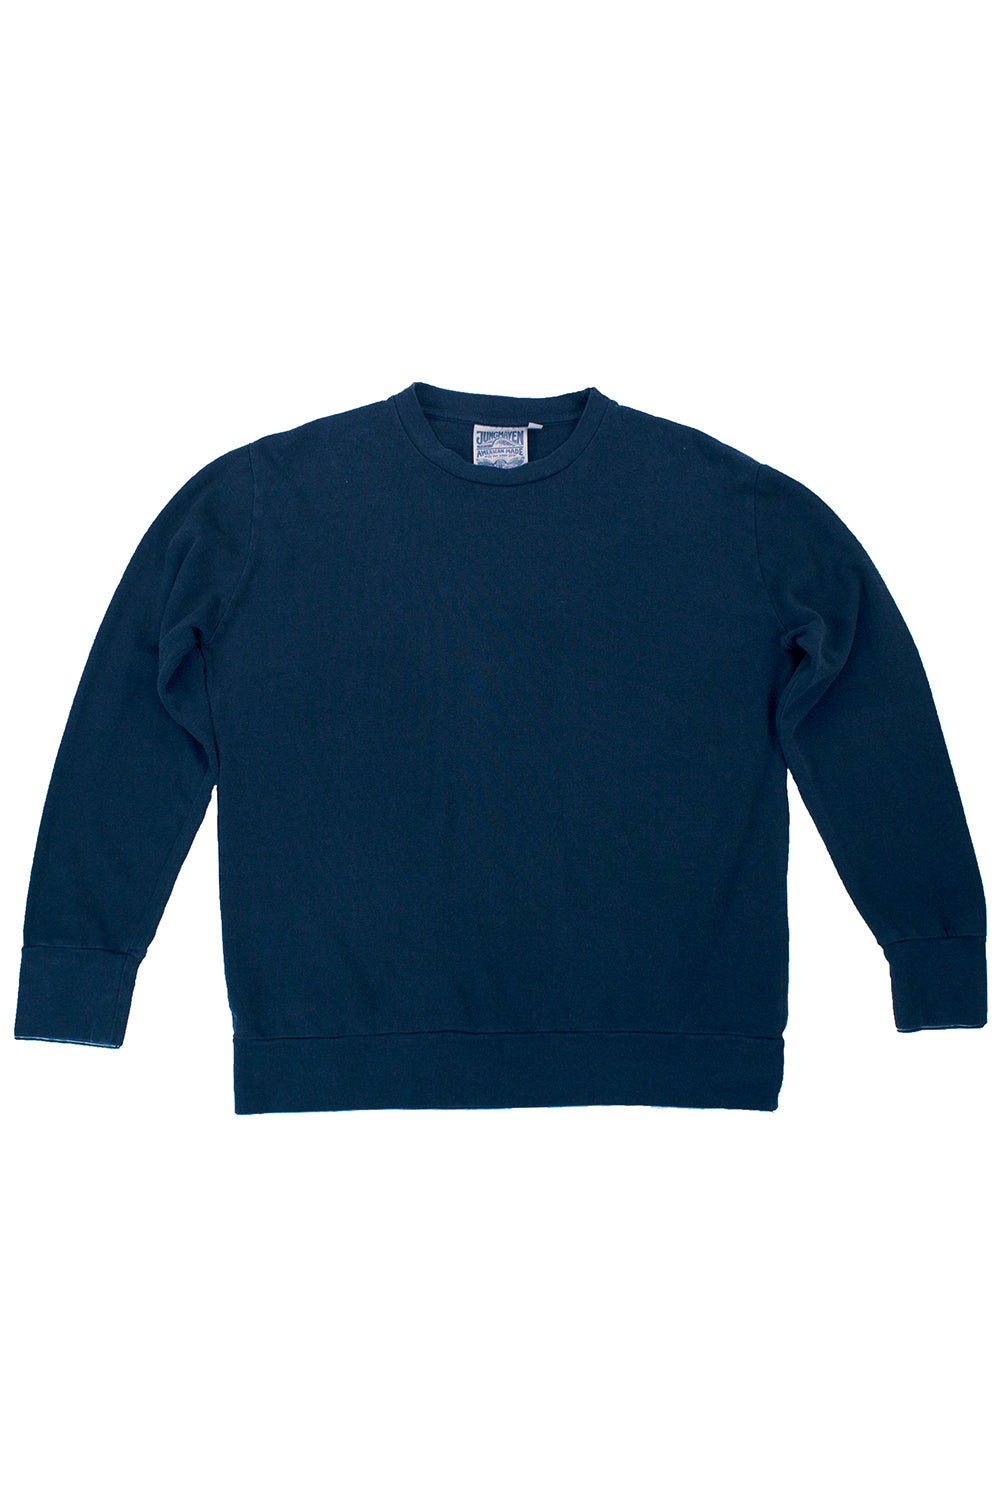 California Pullover | Jungmaven Hemp Clothing & Accessories / Color: Navy